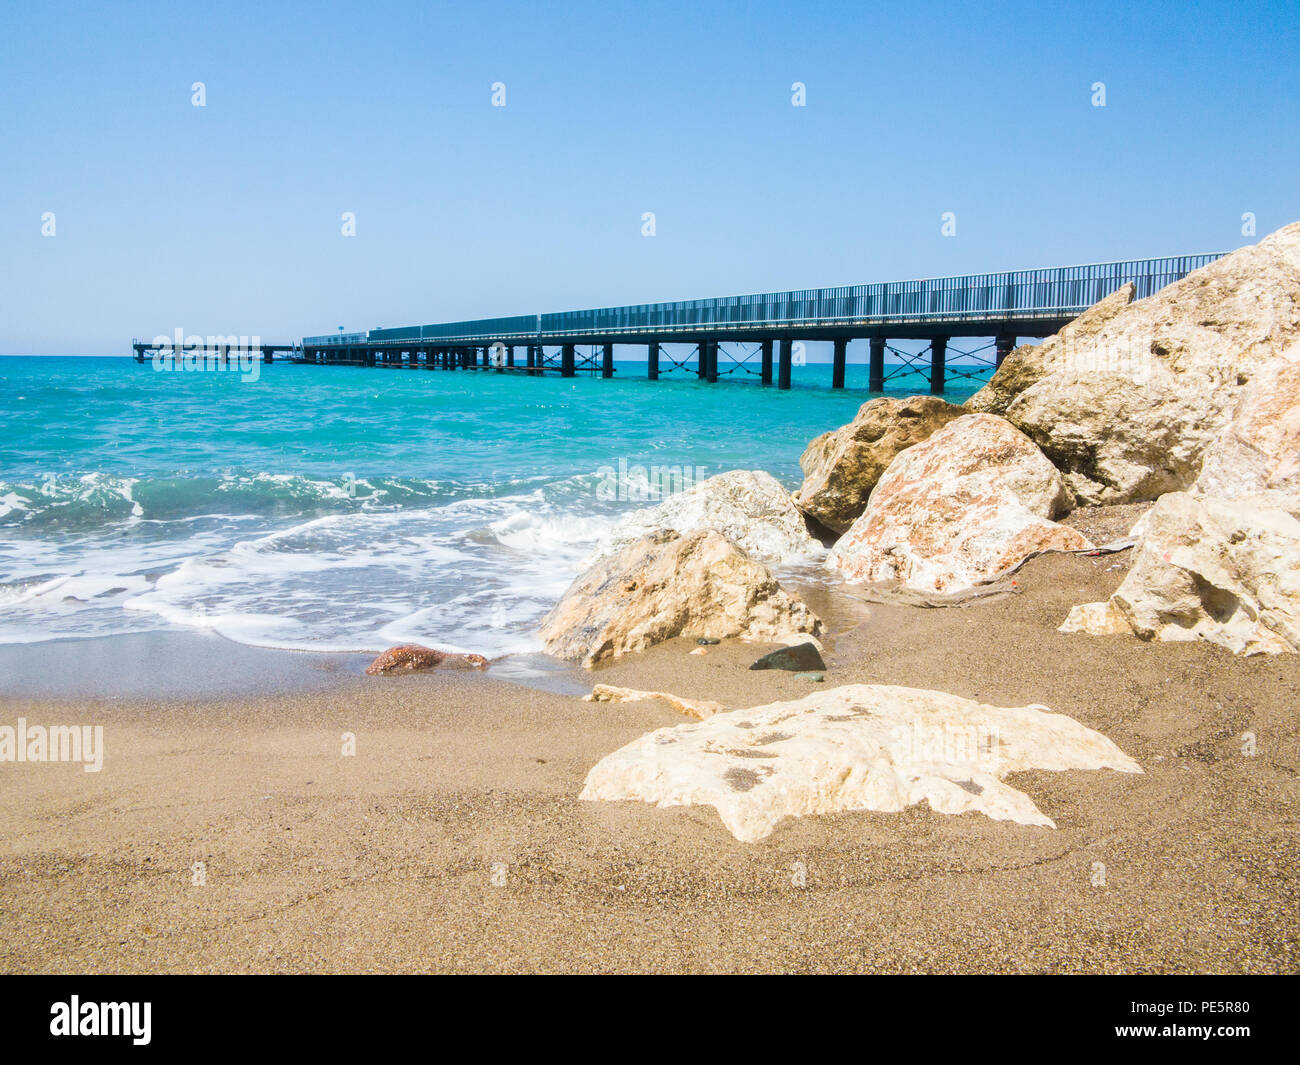 A long pier on the Mediterranean coast near the town of Polis Stock Photo